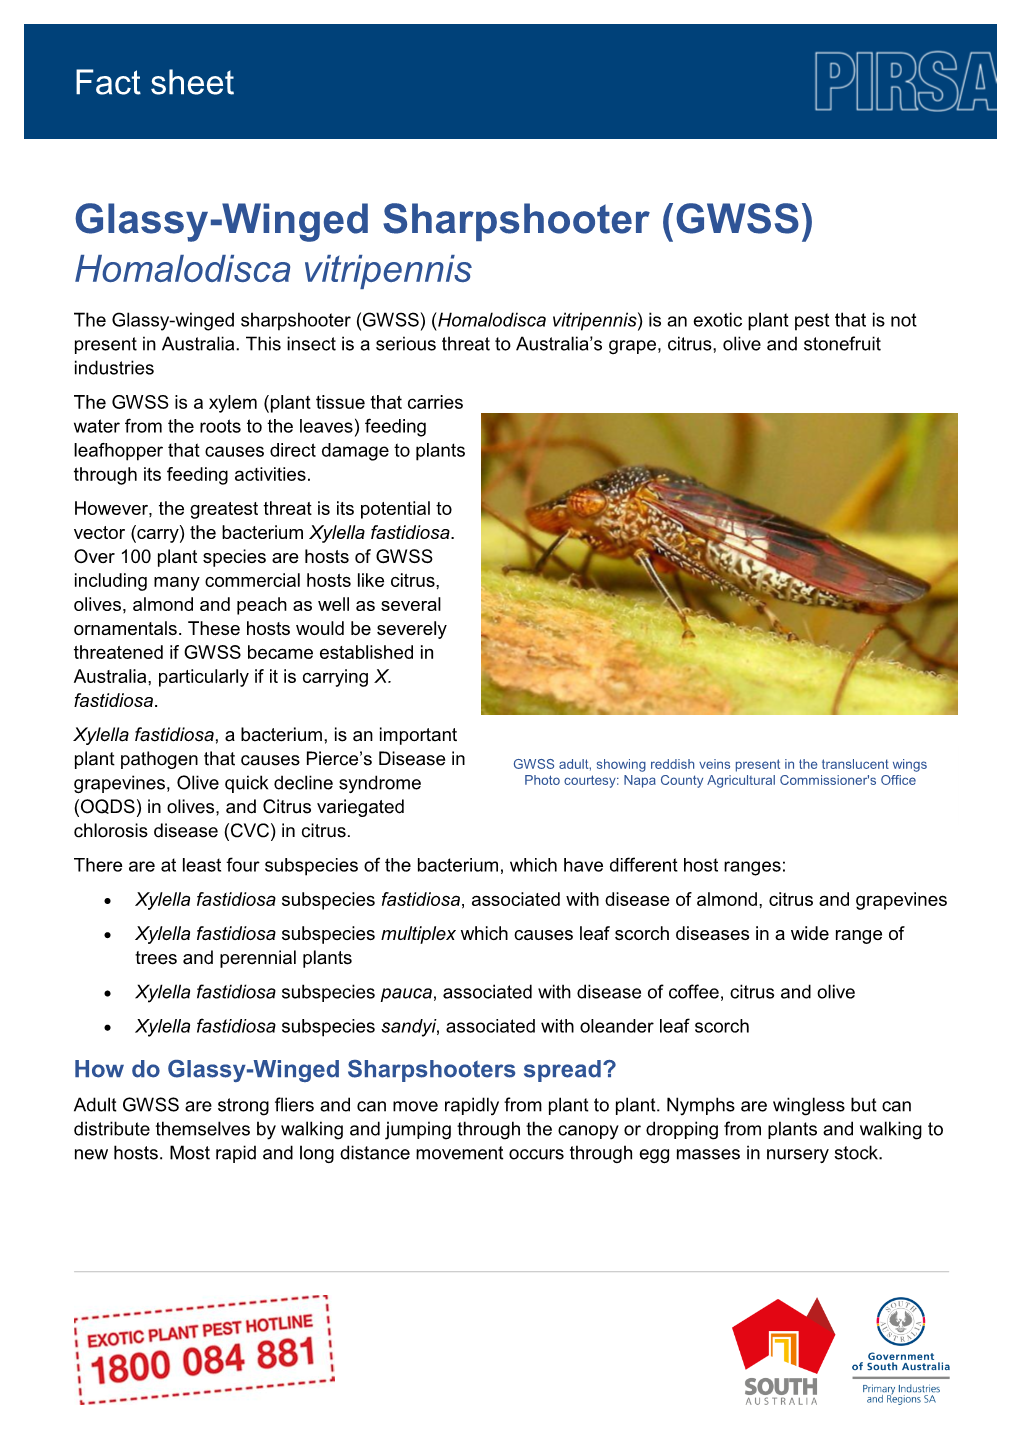 Glassy-Winged Sharpshooter (GWSS) Homalodisca Vitripennis